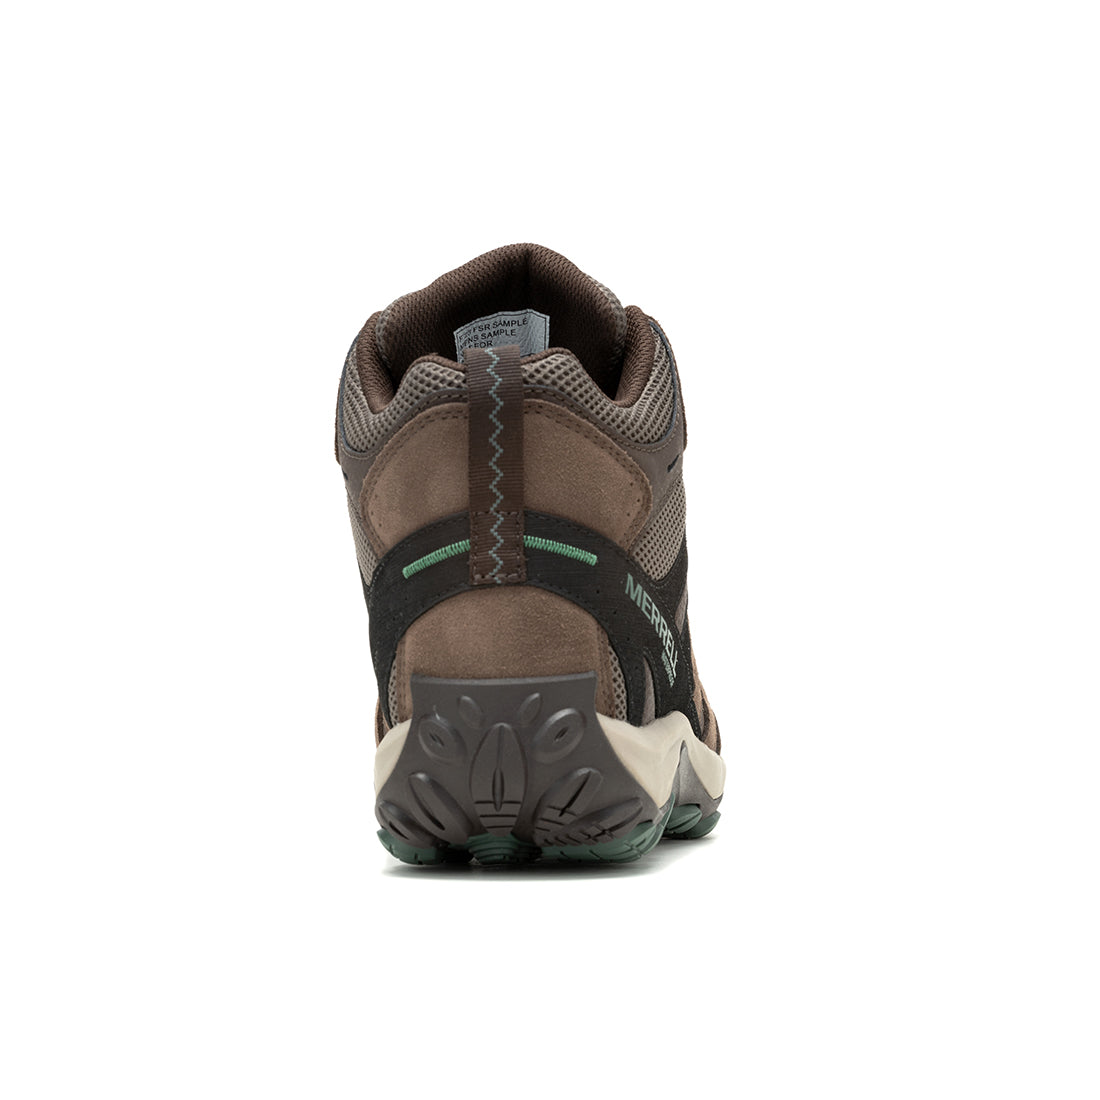 Accentor 3 Mid Waterproof - Bracken Mens Hiking Shoes